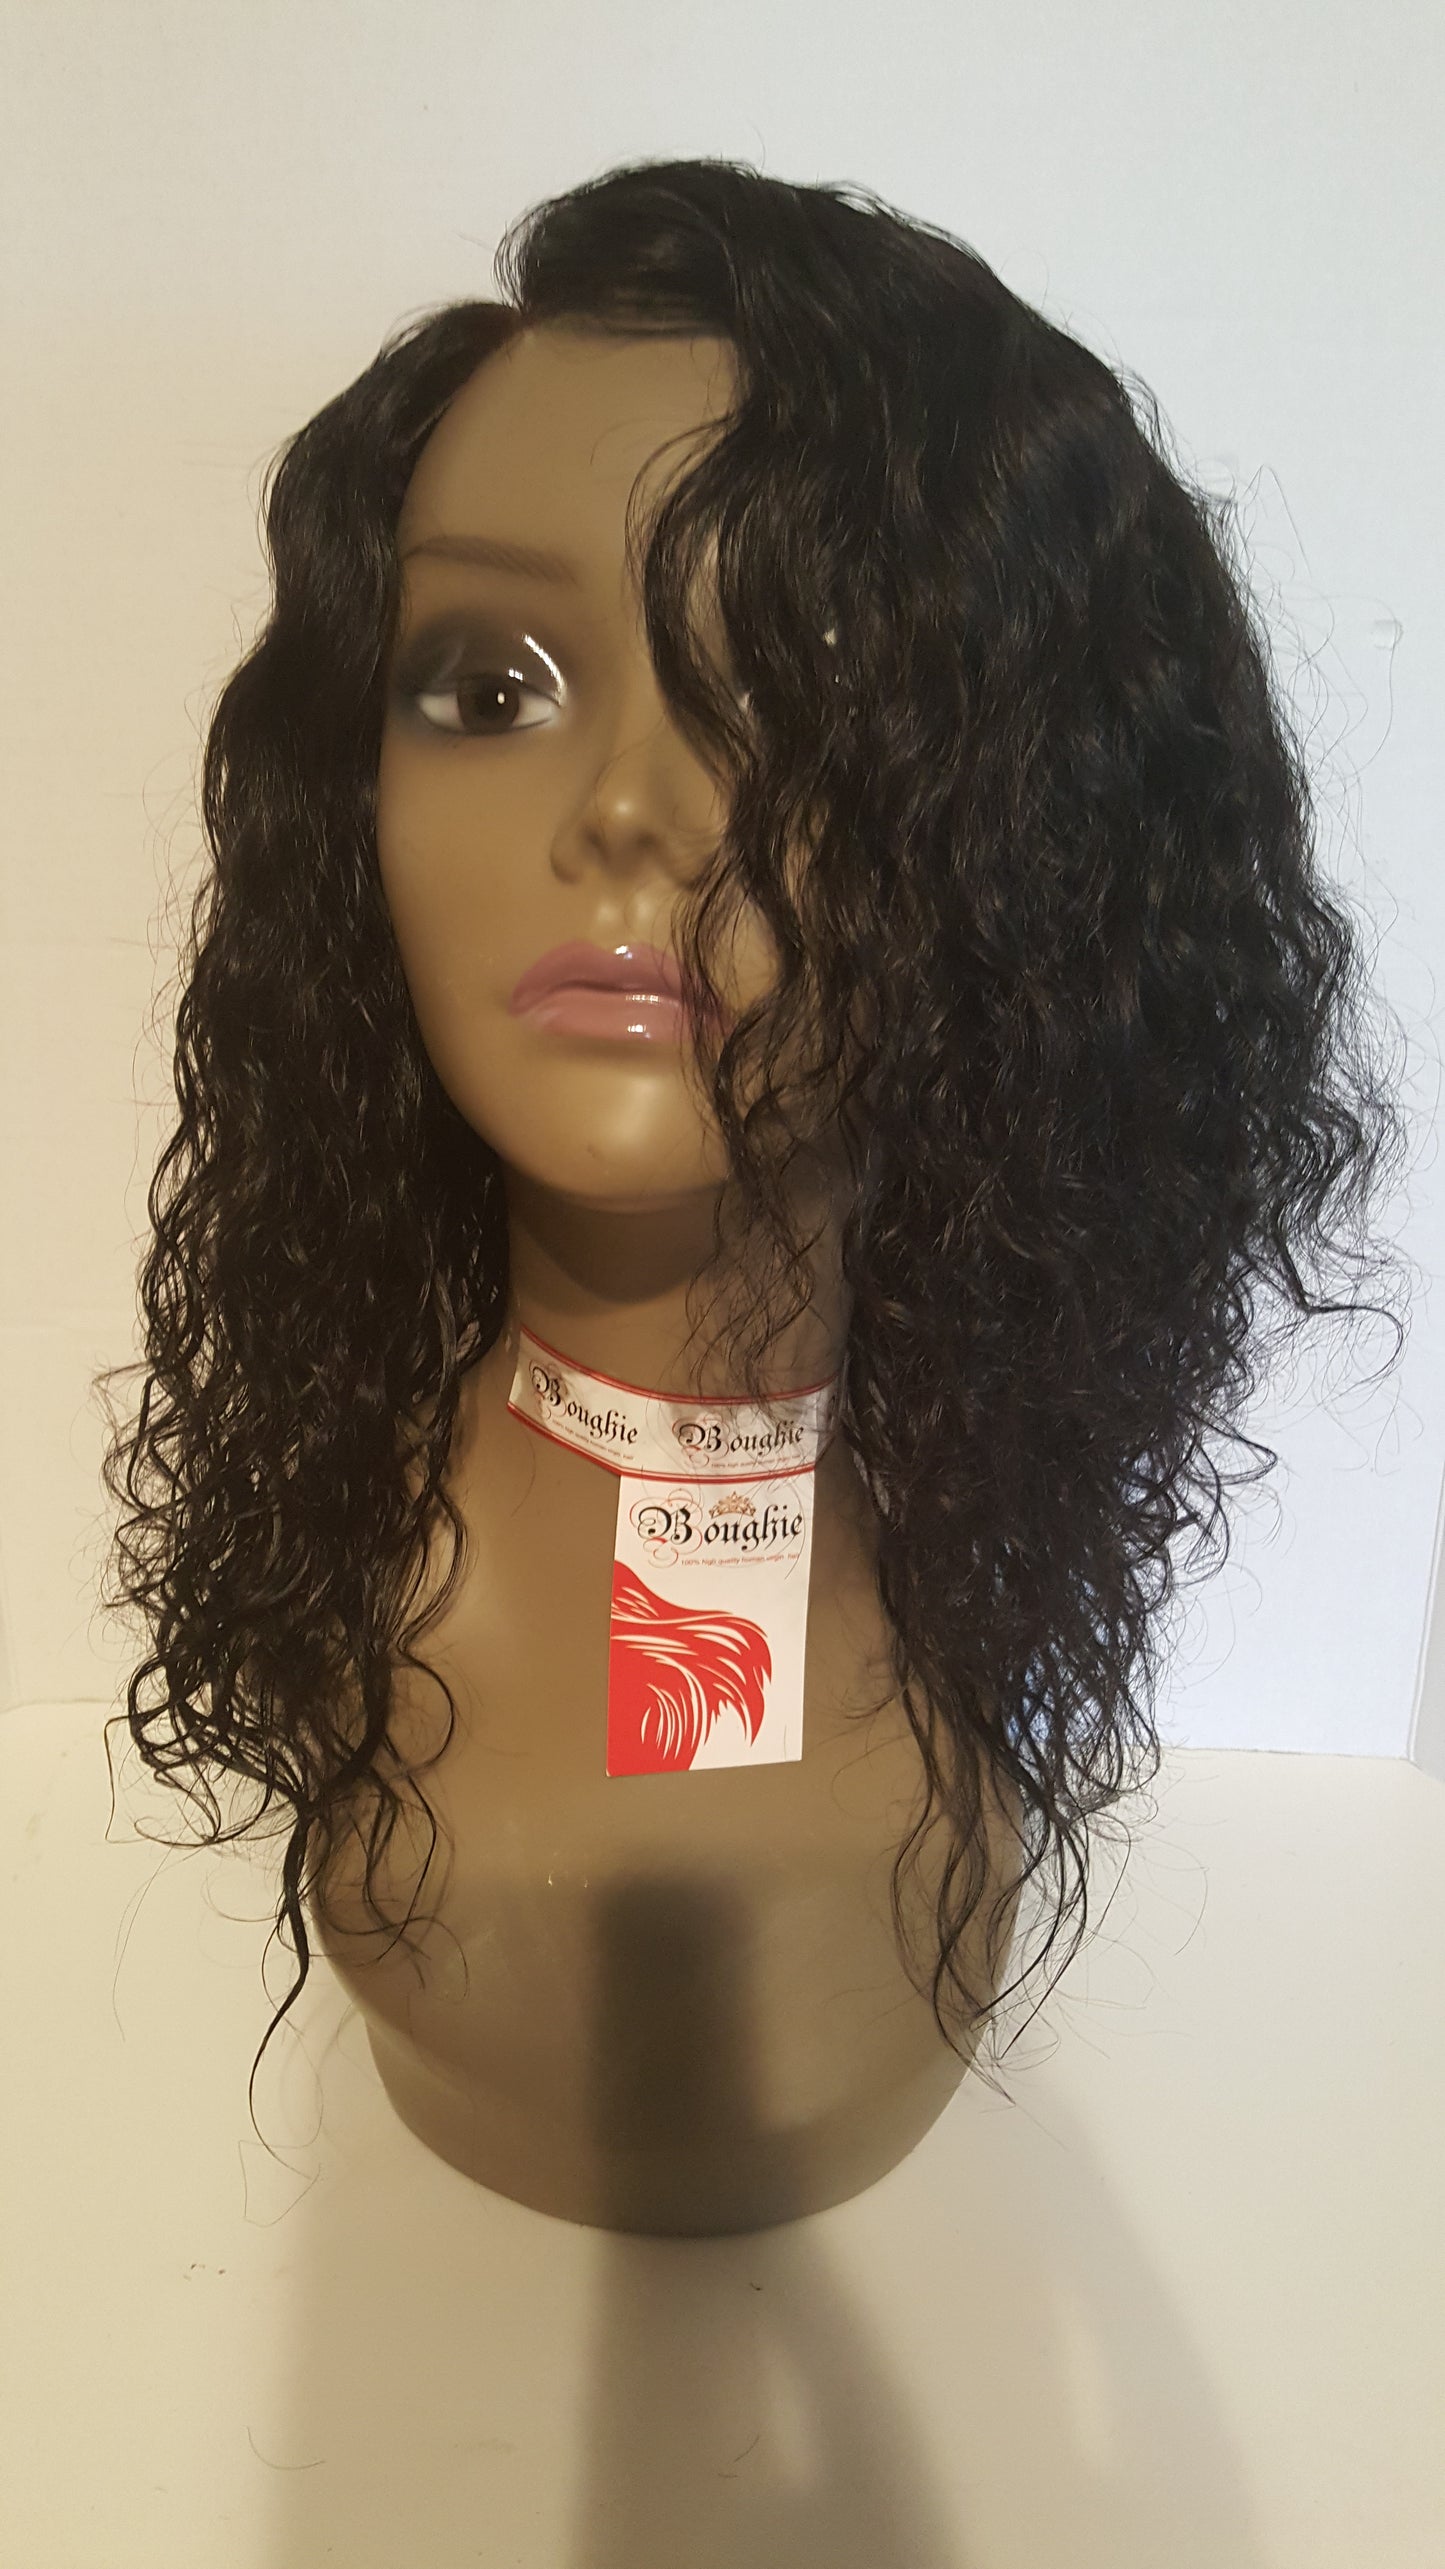 Mongolian wavy 8A - Boughie virgin brazilian hair cosmetics apperal 